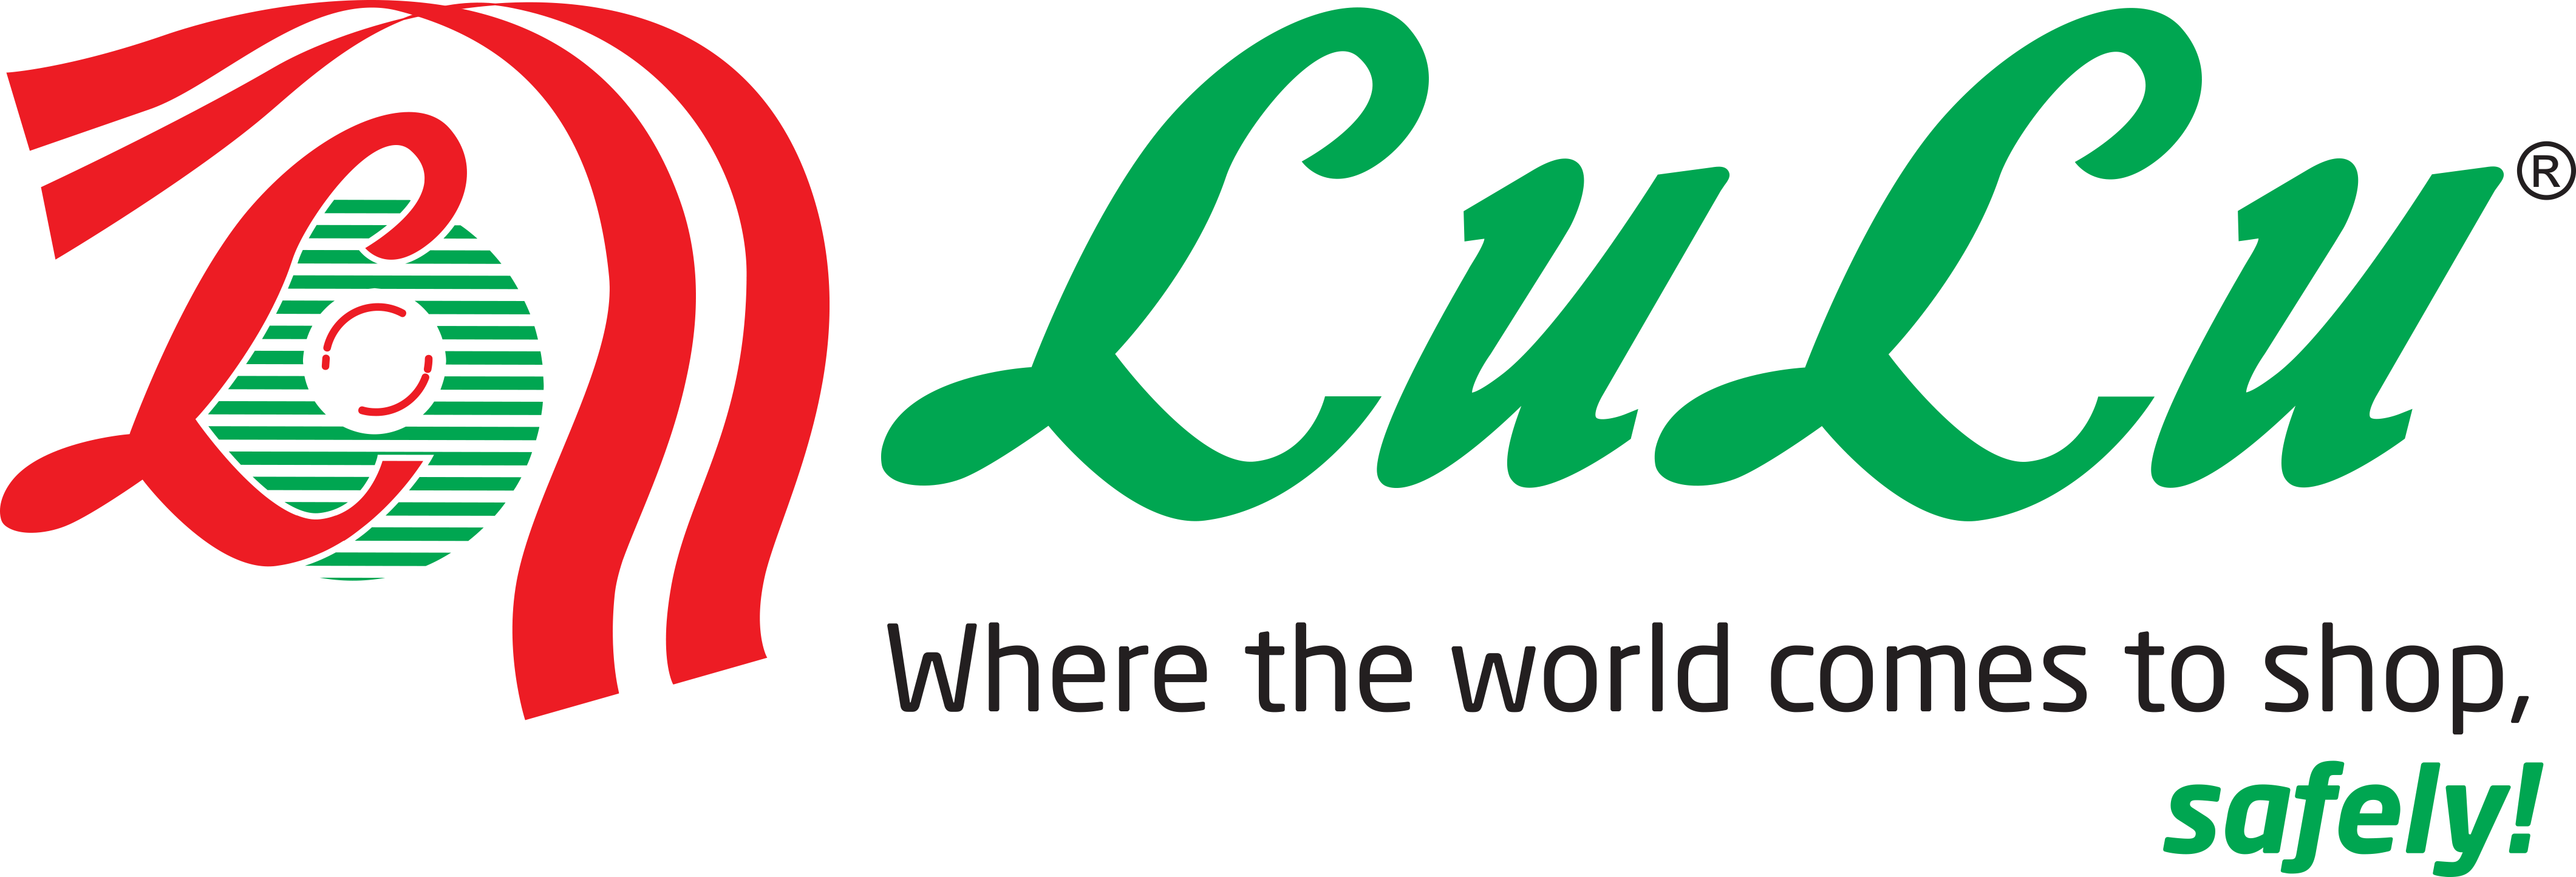 Lulu super market india